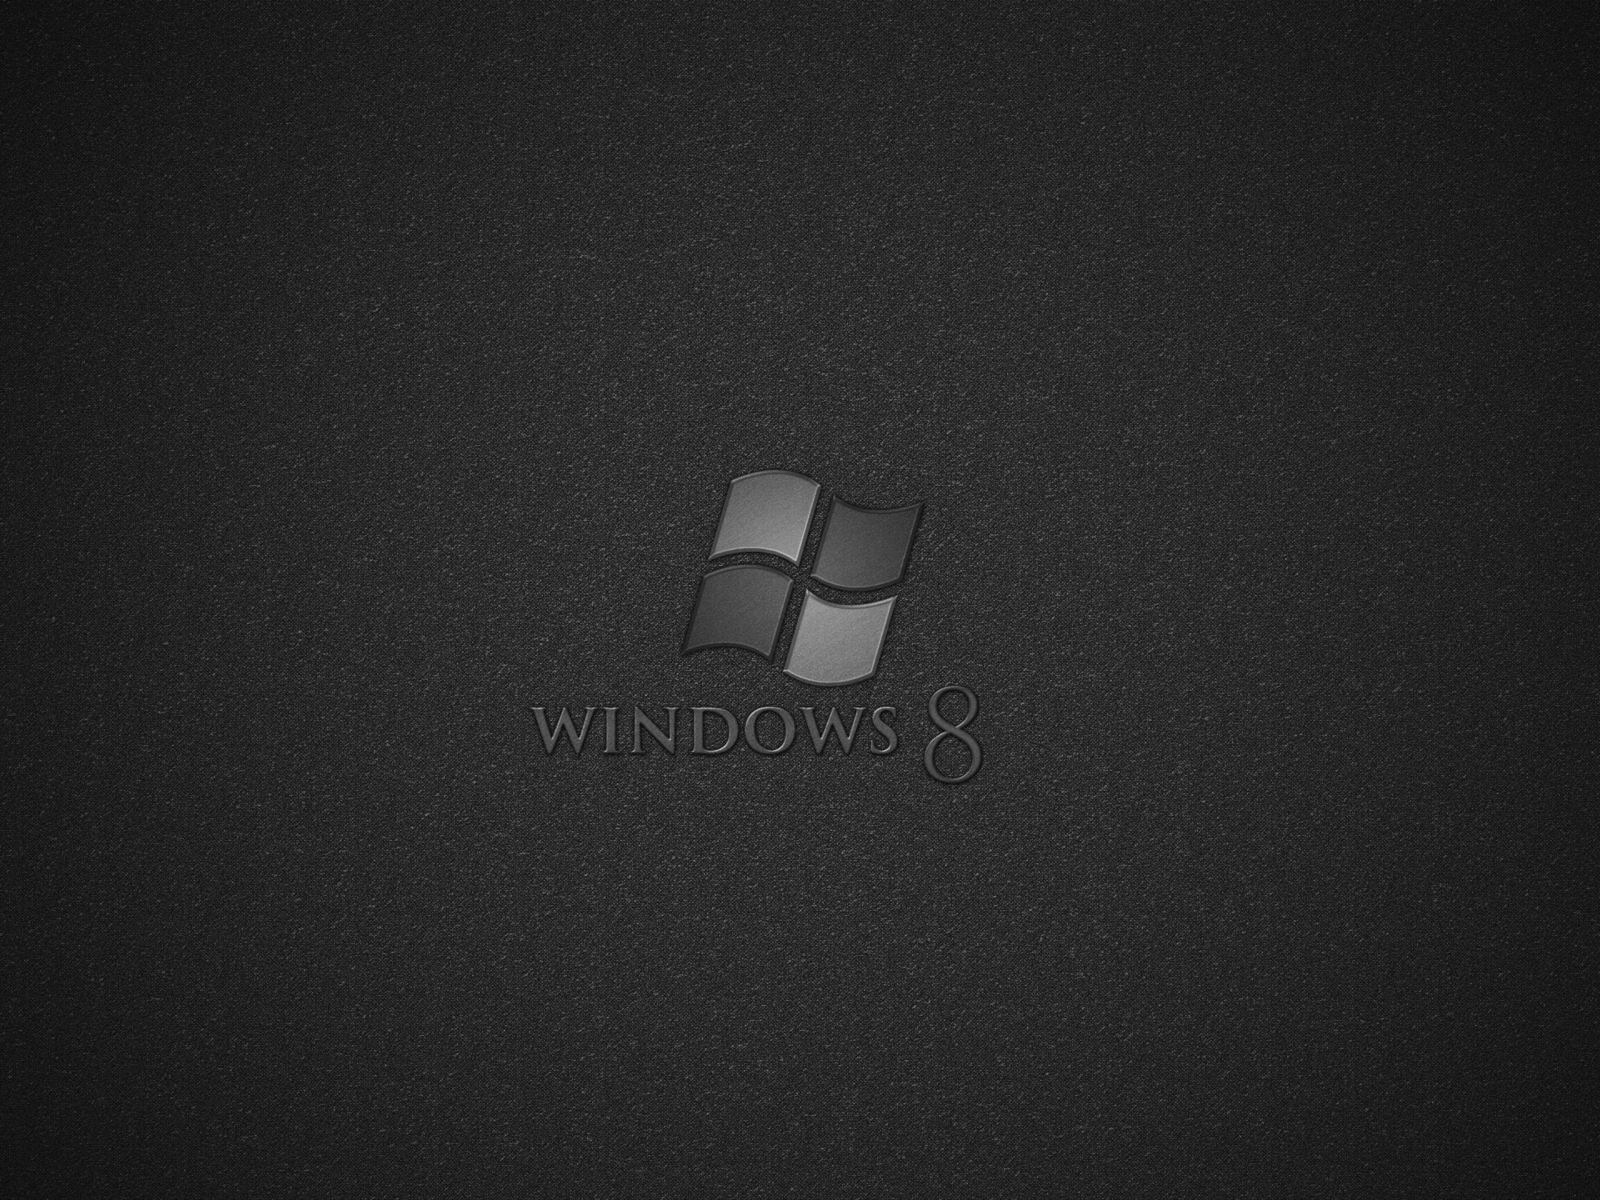 Windows 8 Tech for 1600 x 1200 resolution